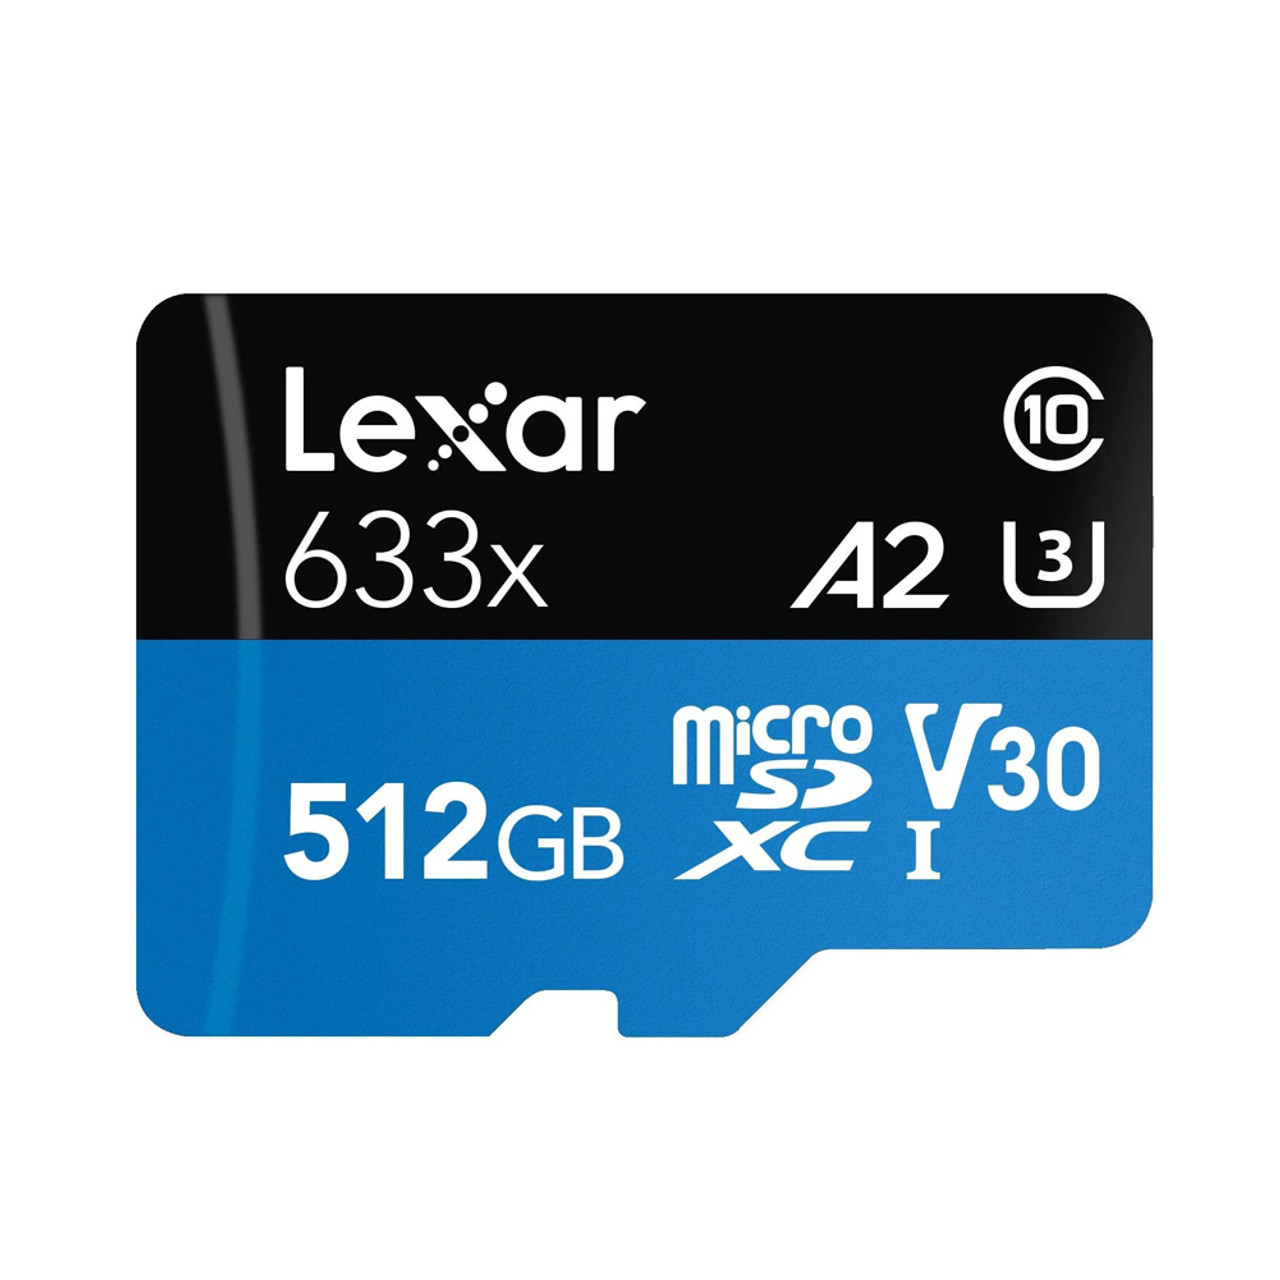 Lexar LSDMI512BBNL633A 512GB High-Performance UHS-I Class 10 U3 633x microSDXC Memory Card with SD Adapter